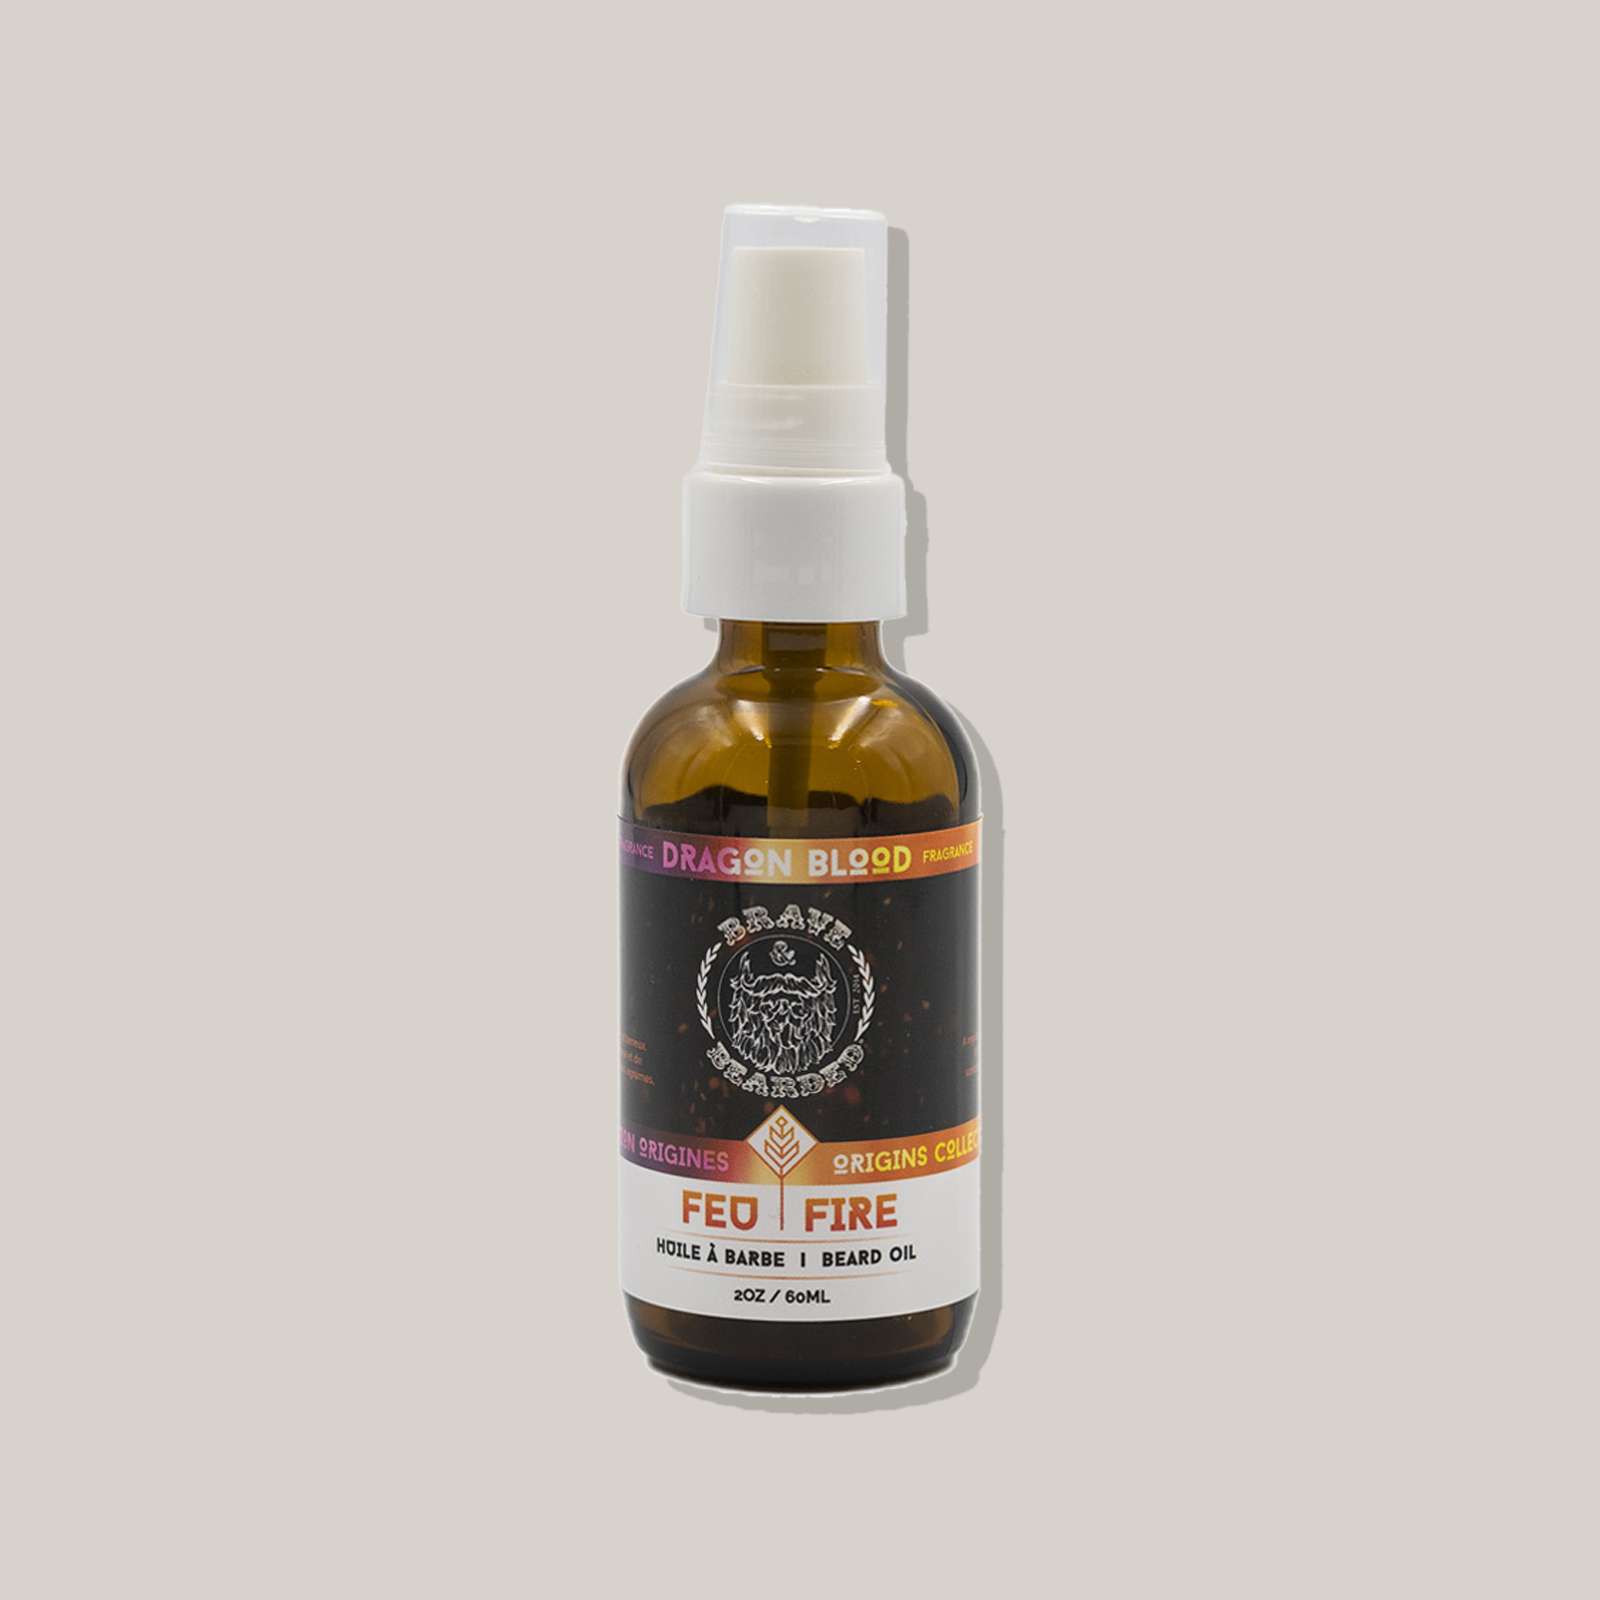 ORIGINES | FEU Dragon Blood Fire beard oil